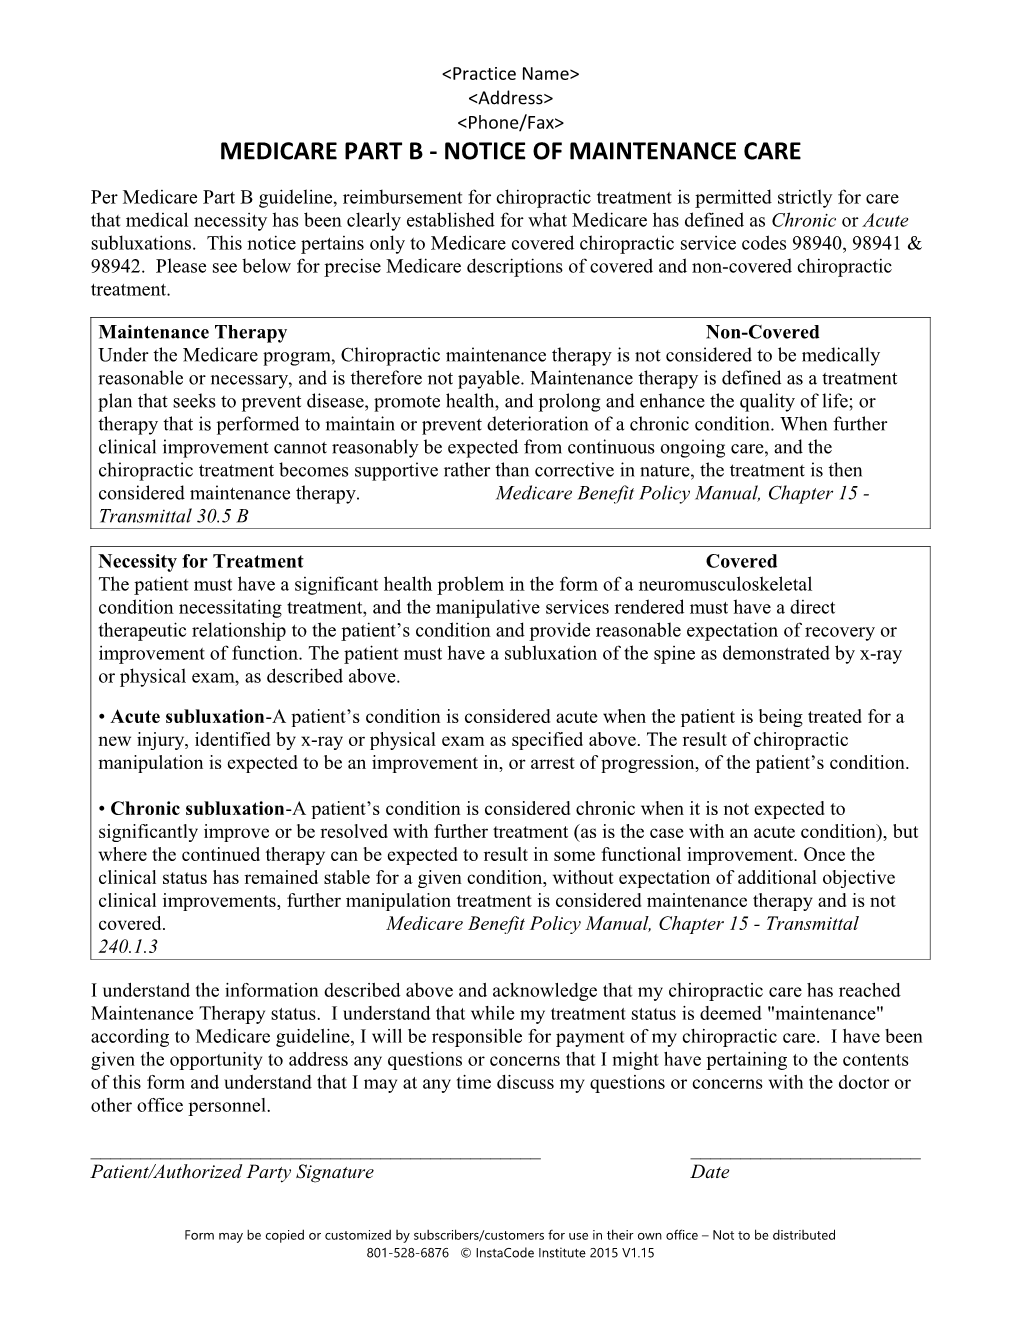 Medicare Part B - Notice of Maintenance Care